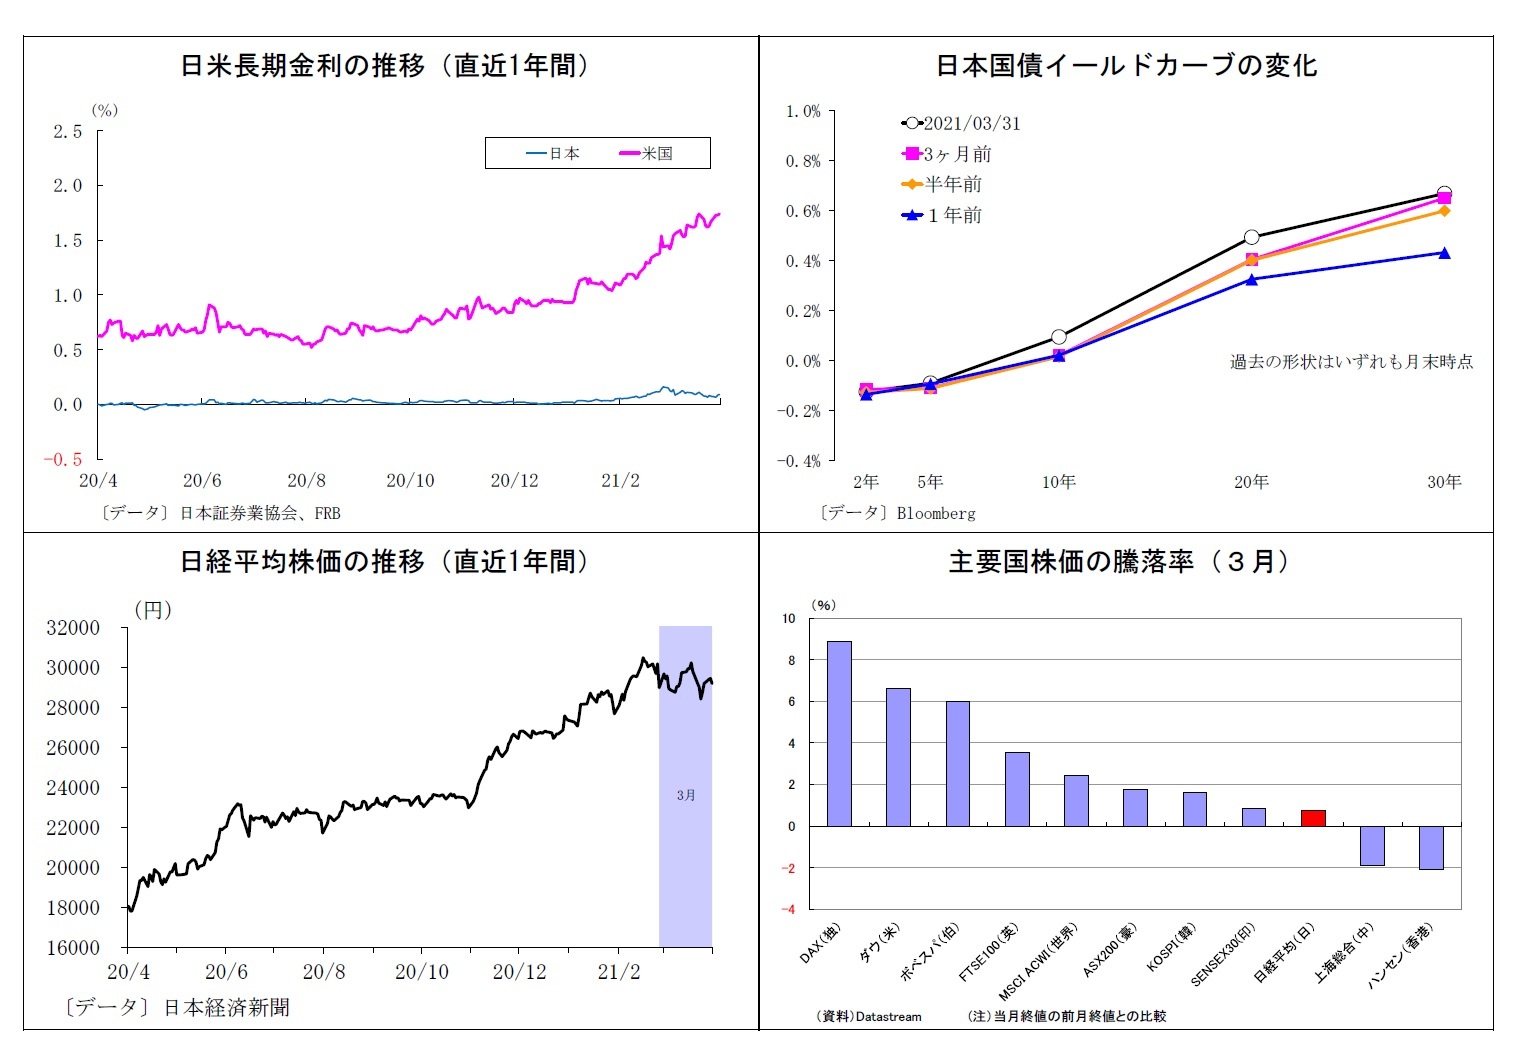 日米長期金利の推移（直近1年間）/日本国債イールドカーブの変化/日経平均株価の推移（直近1年間）/主要国株価の騰落率（３月）